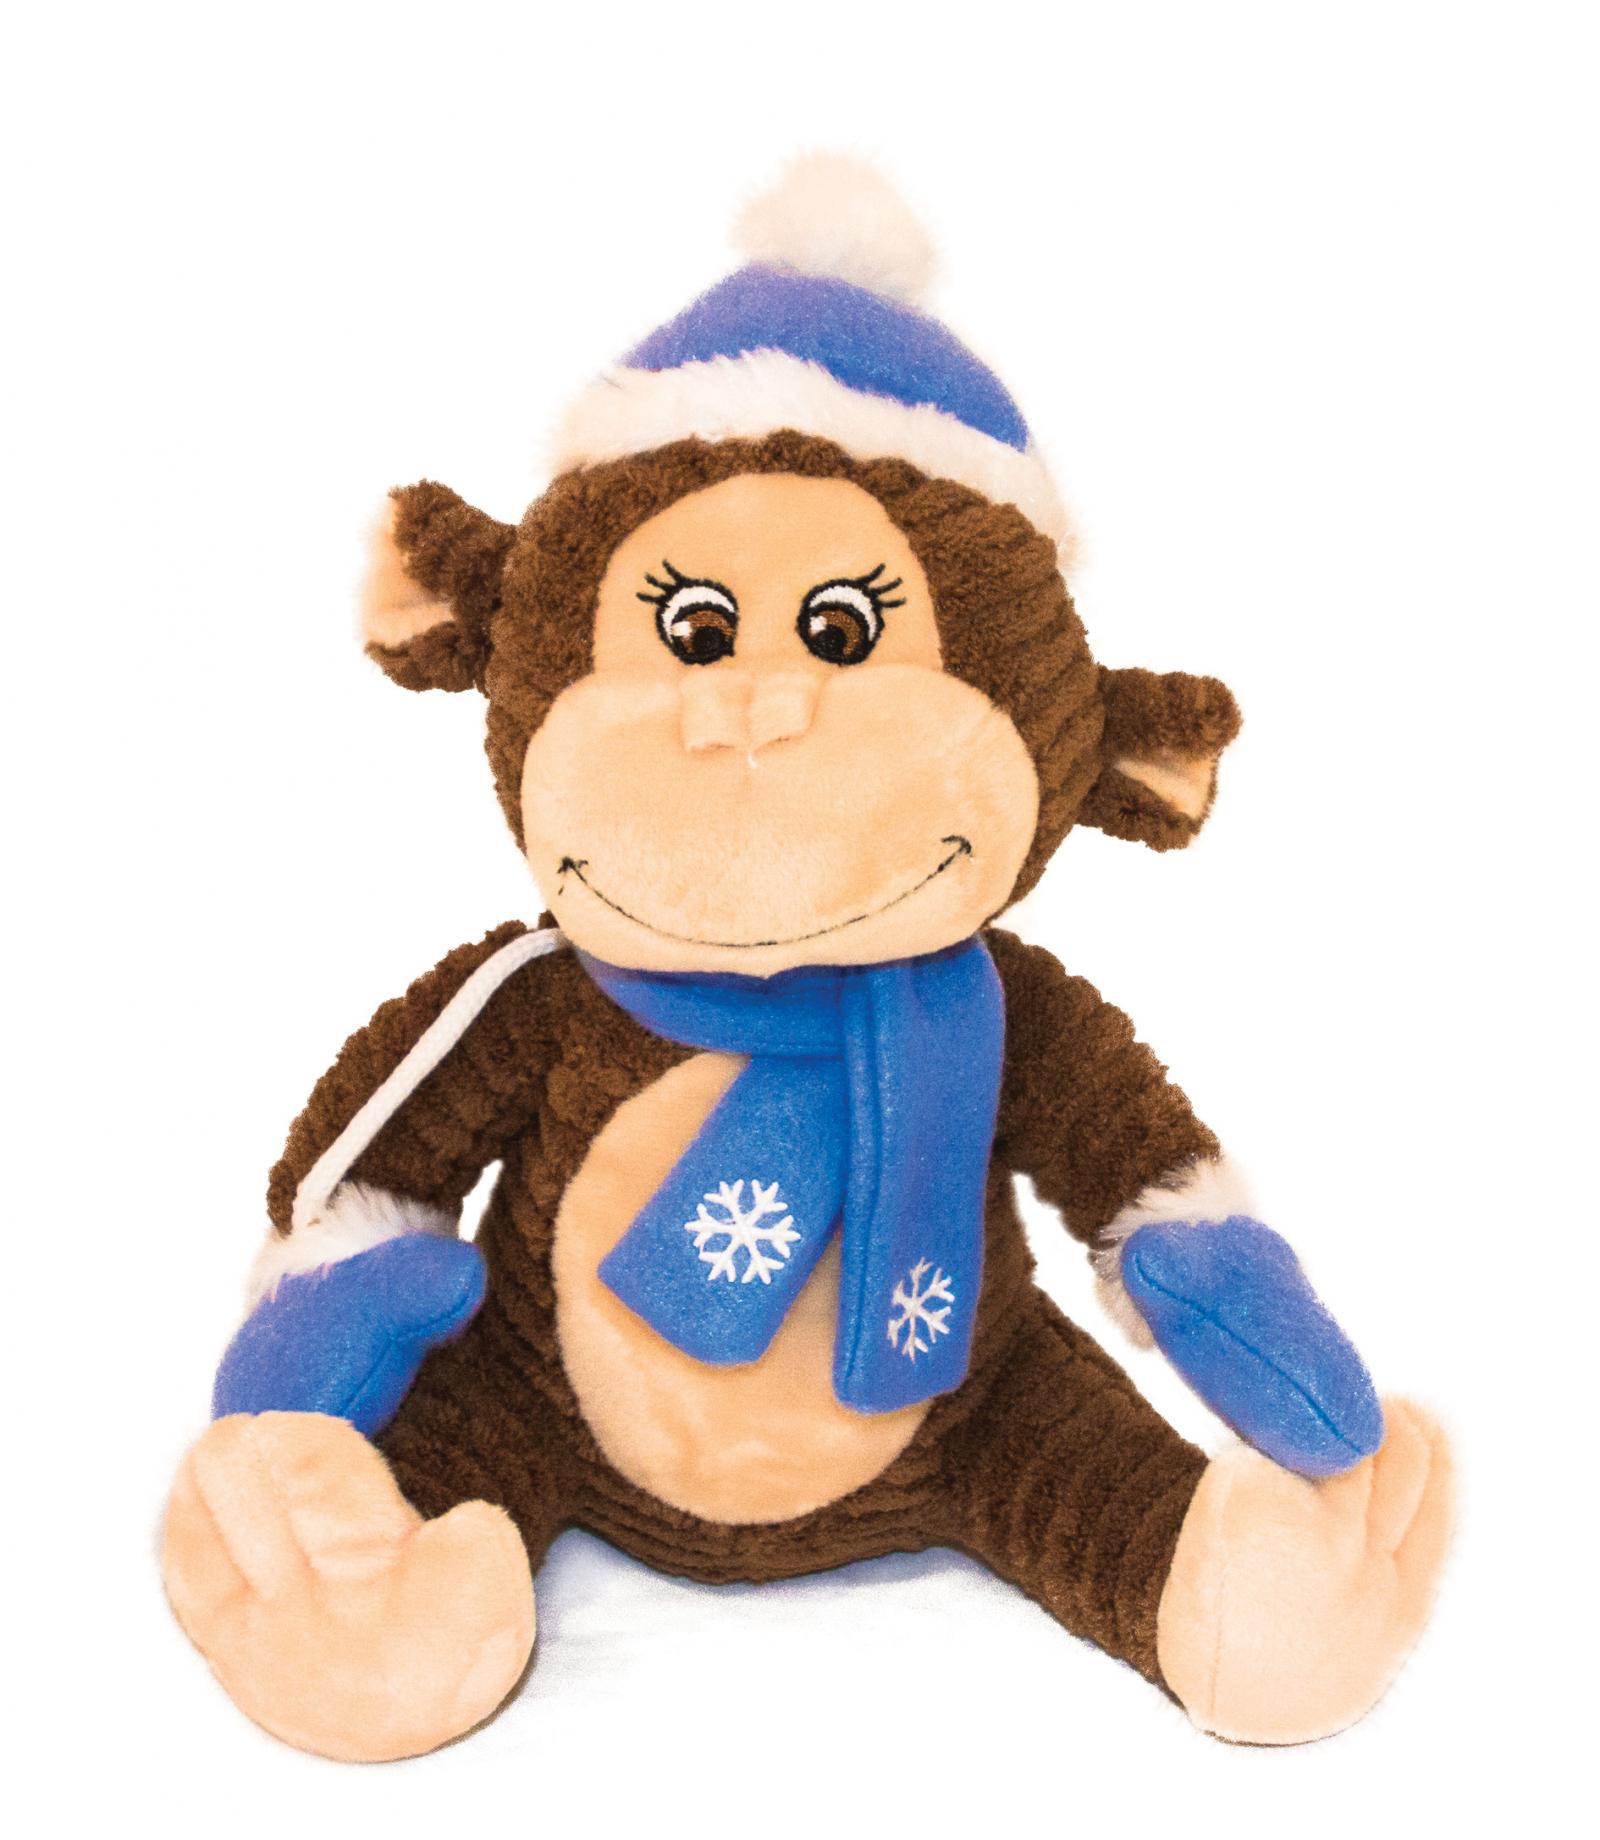 Снежок 20. Gullivee® игрушка обезьянка 2015. Гулливер мягкие игрушки обезьяна. Мягкая игрушка «снежок», 20 см. Гулливер и обезьяна.